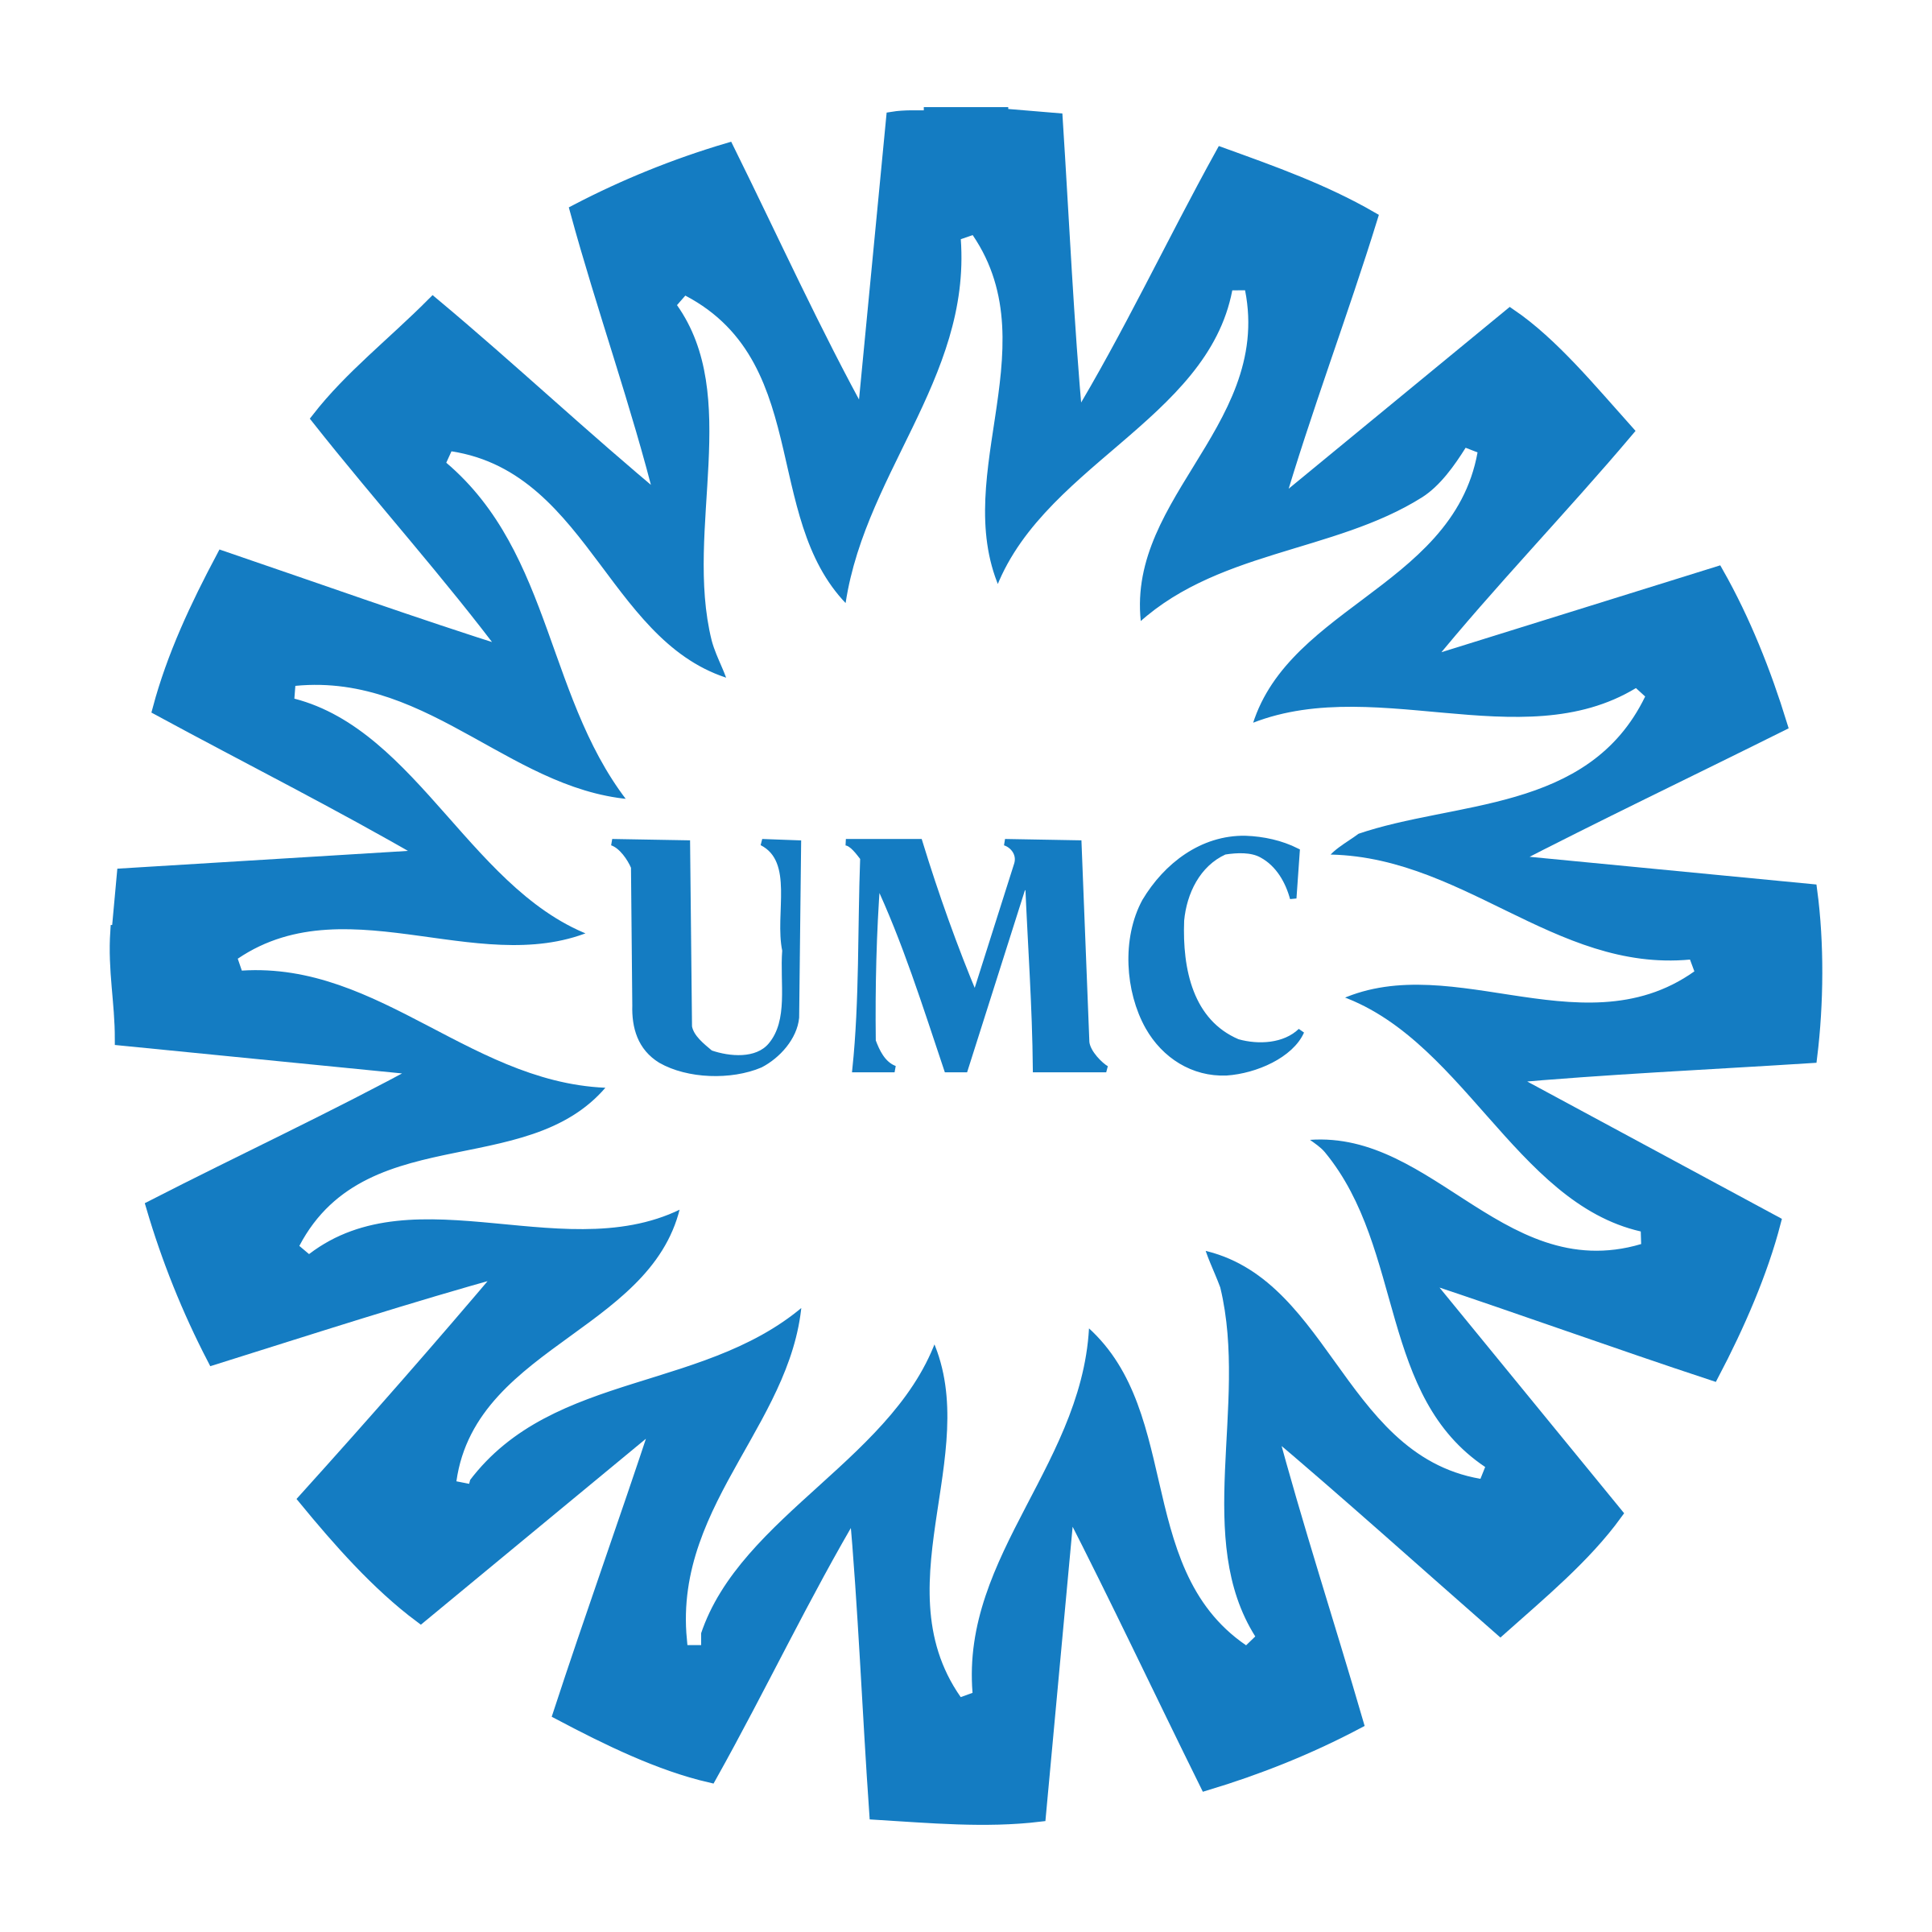 UMC Logo - UMC Utrecht Logo PNG Transparent & SVG Vector - Freebie Supply